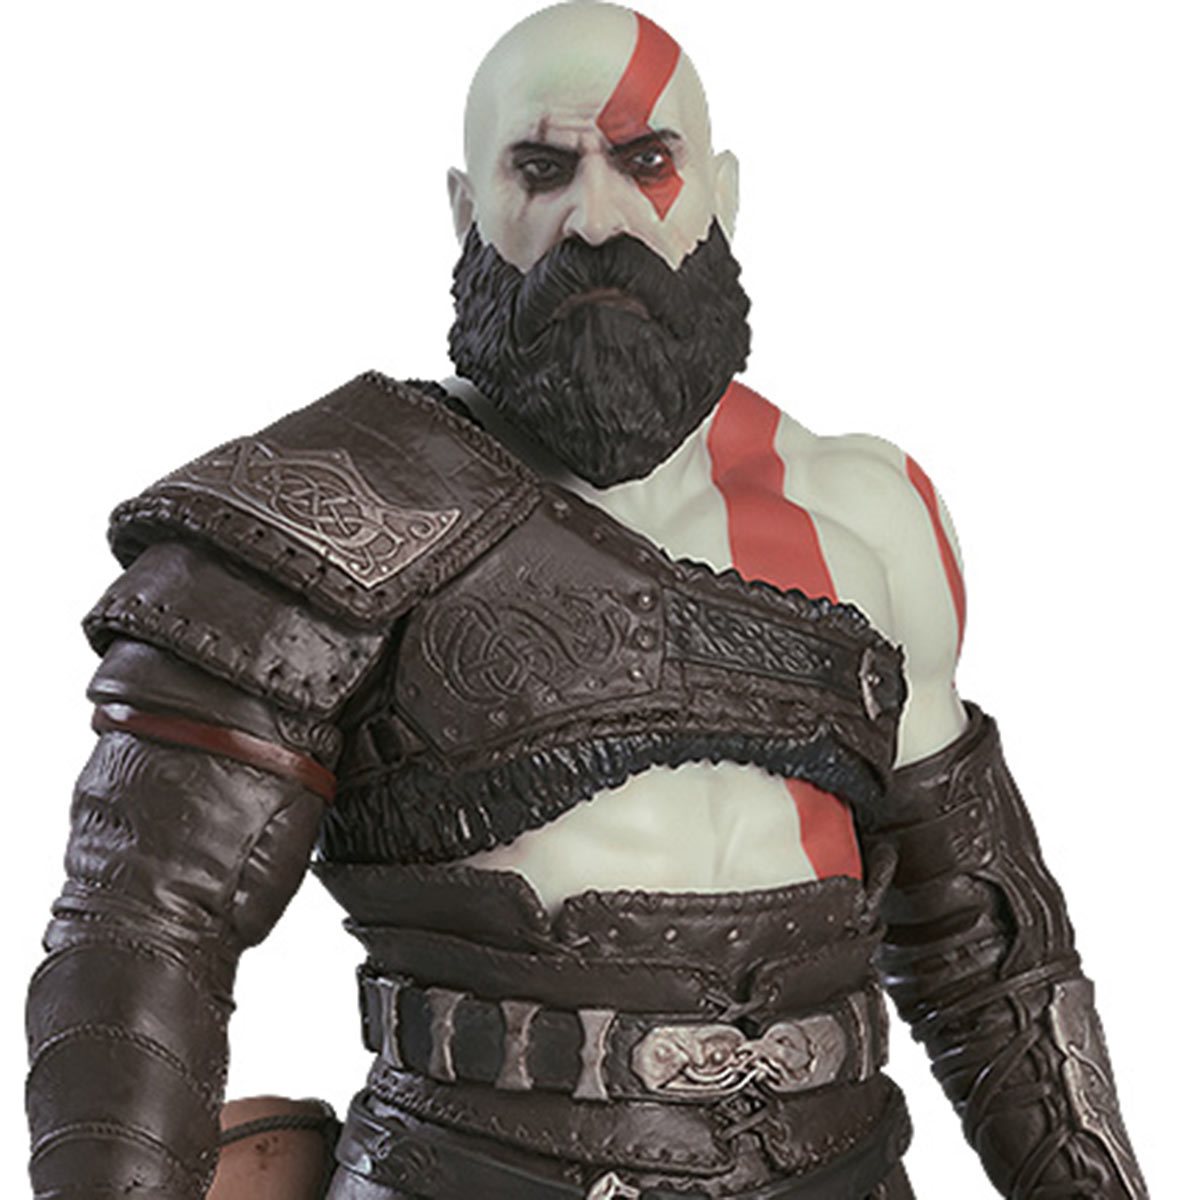 NECA God of War Kratos 7″ Scale Action Figure for sale online